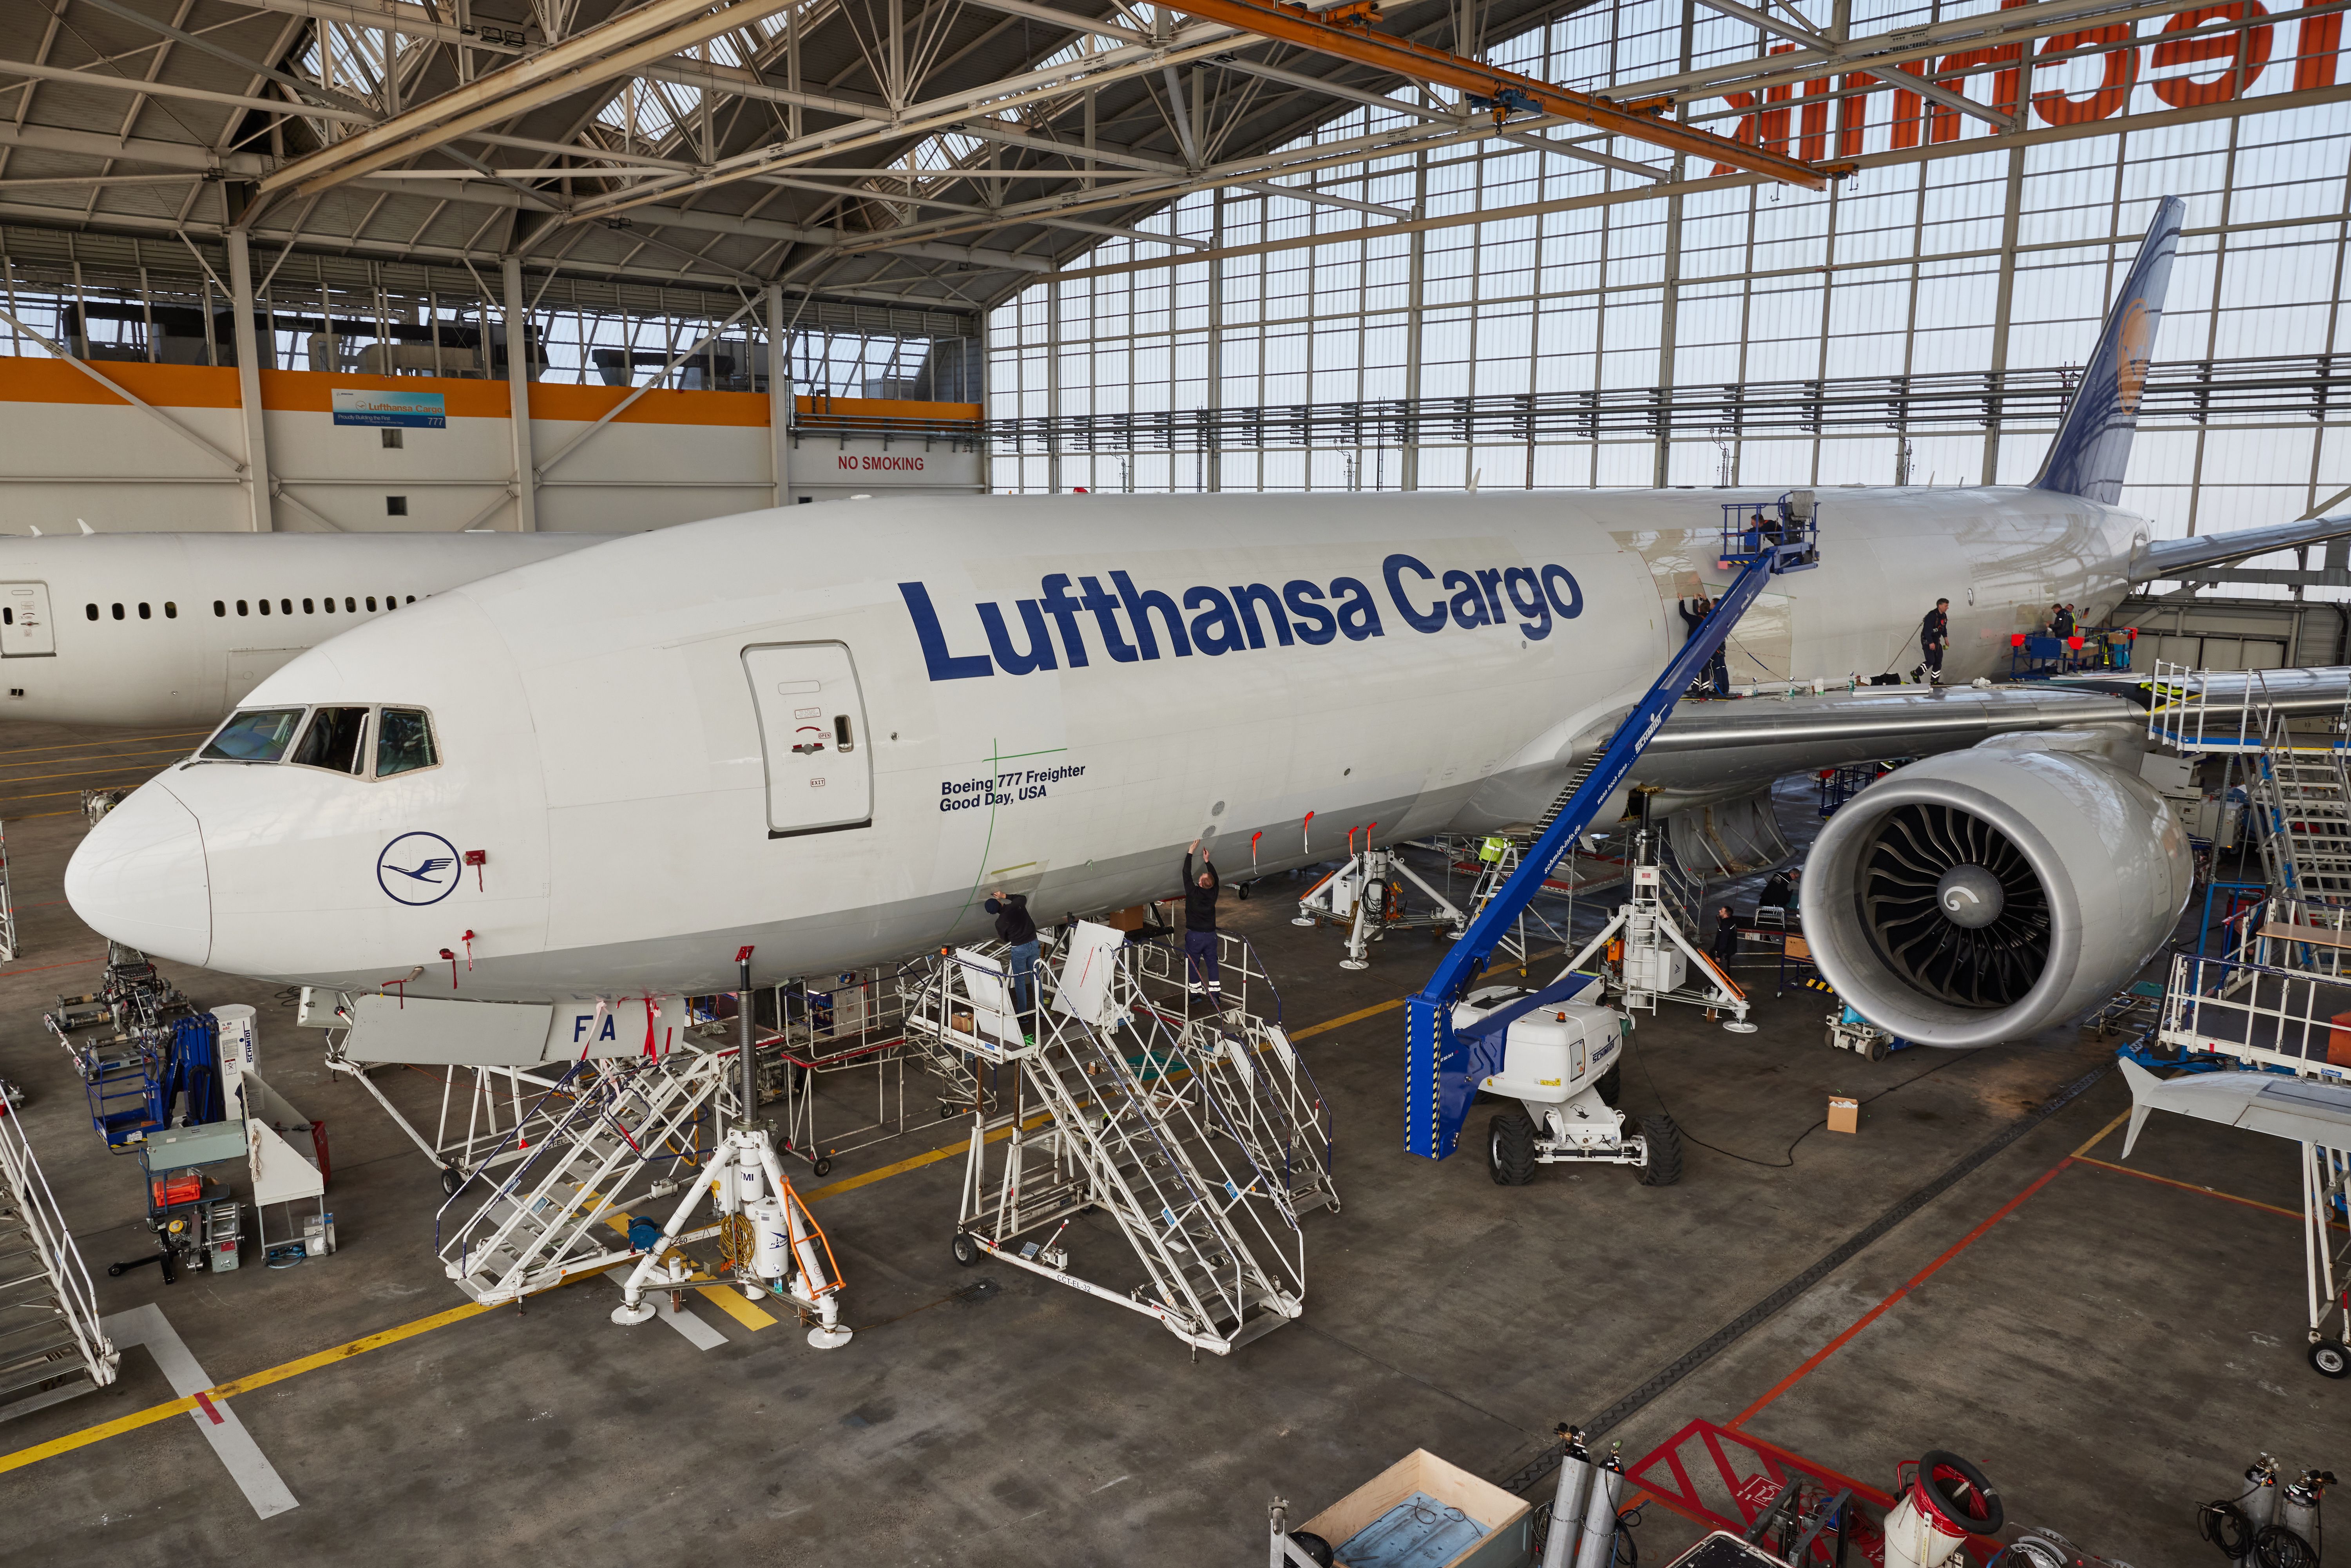 A Lufthansa cargo airliner in the maintenance hangar.